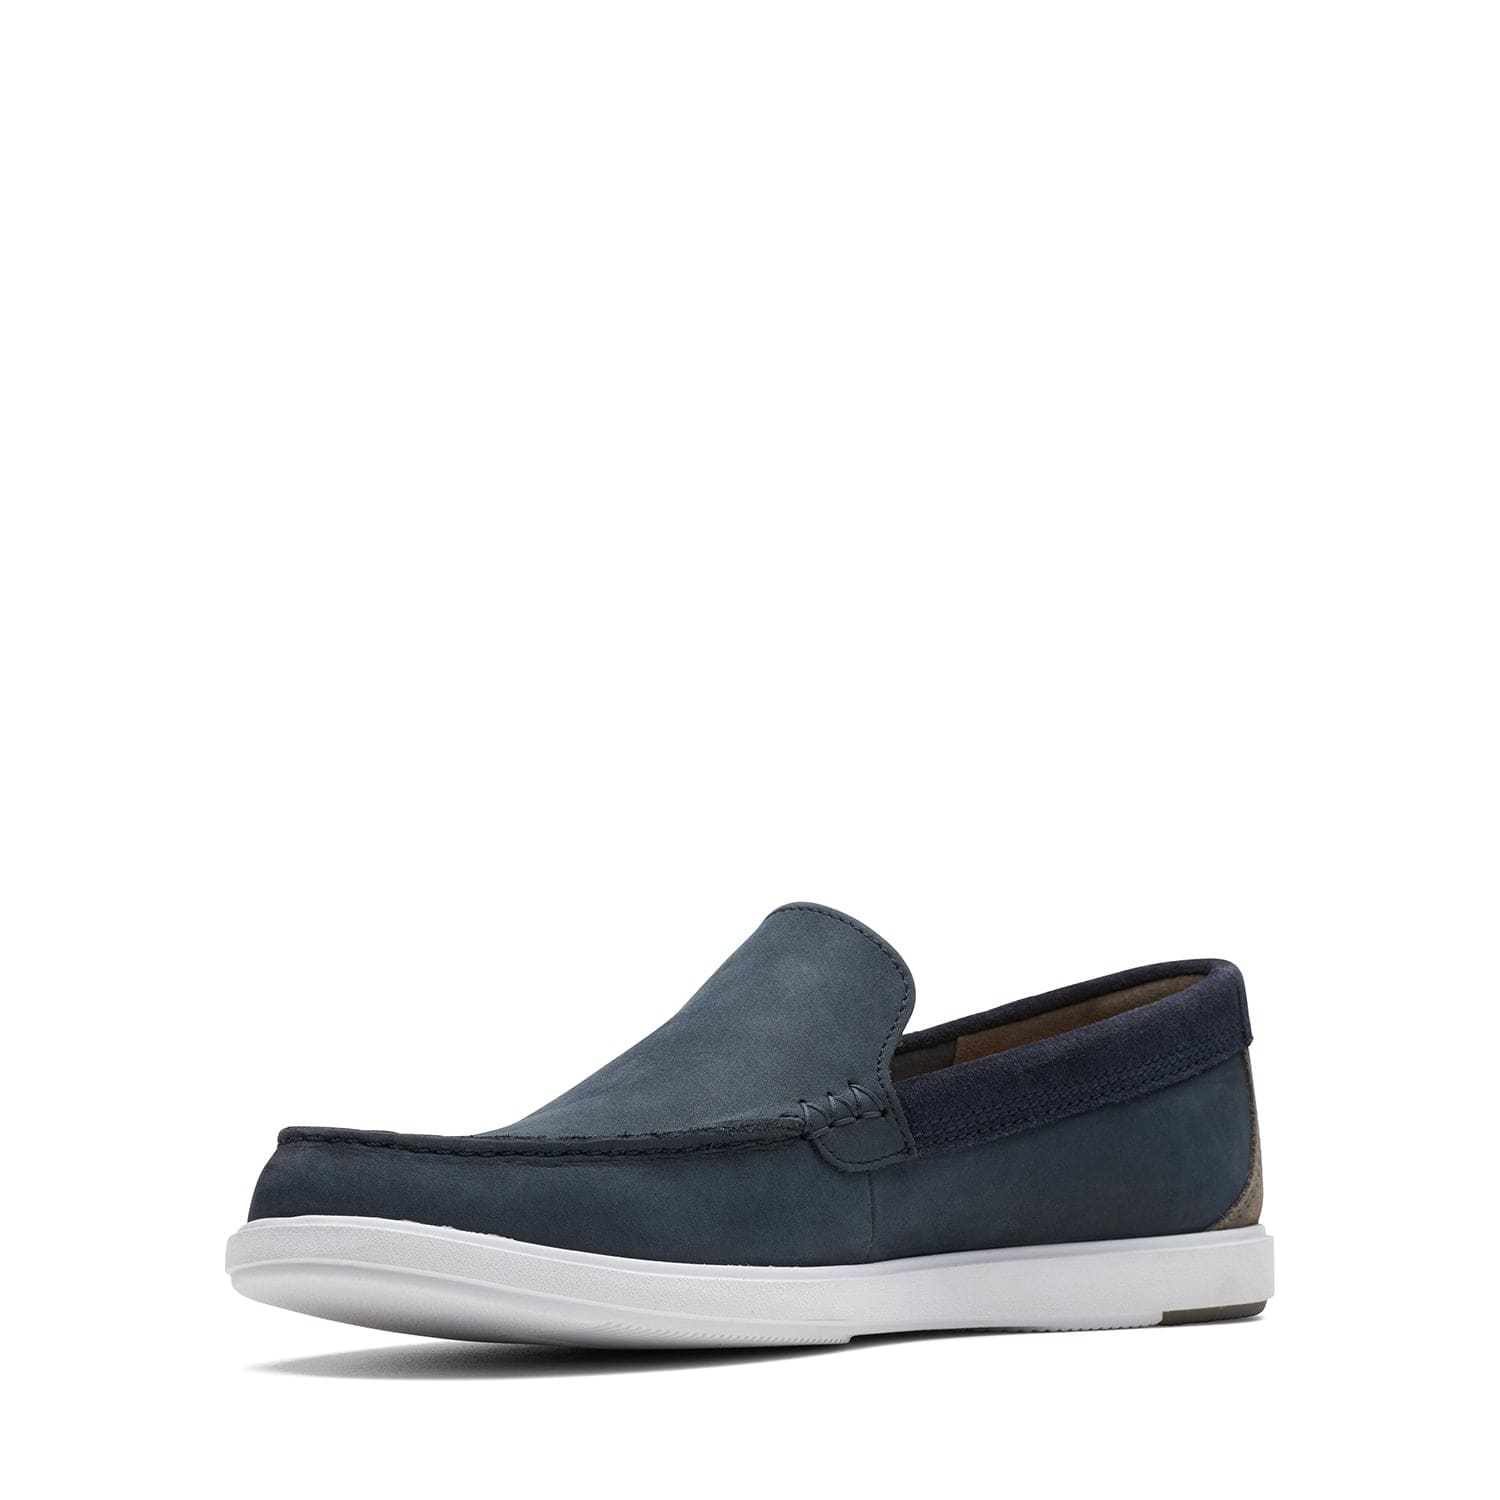 Clarks Bratton Loafer - Shoes - Navy Nubuck - 261724487 - G Width (Standard Fit)